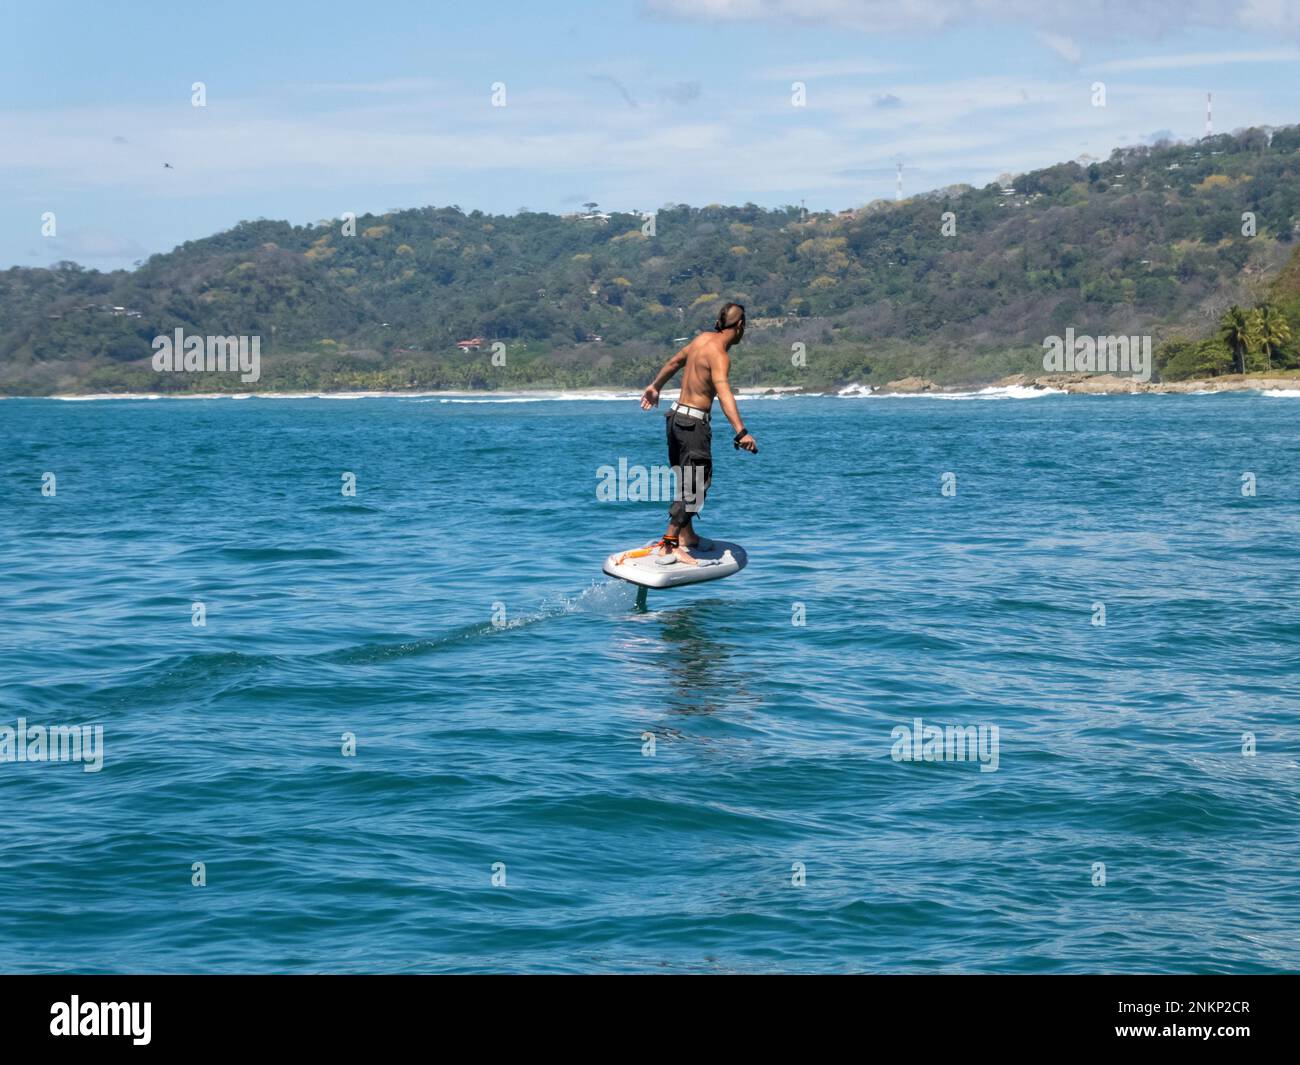 A man rides an E-Foil across the surface of the water near the coastline of Malpais Stock Photo